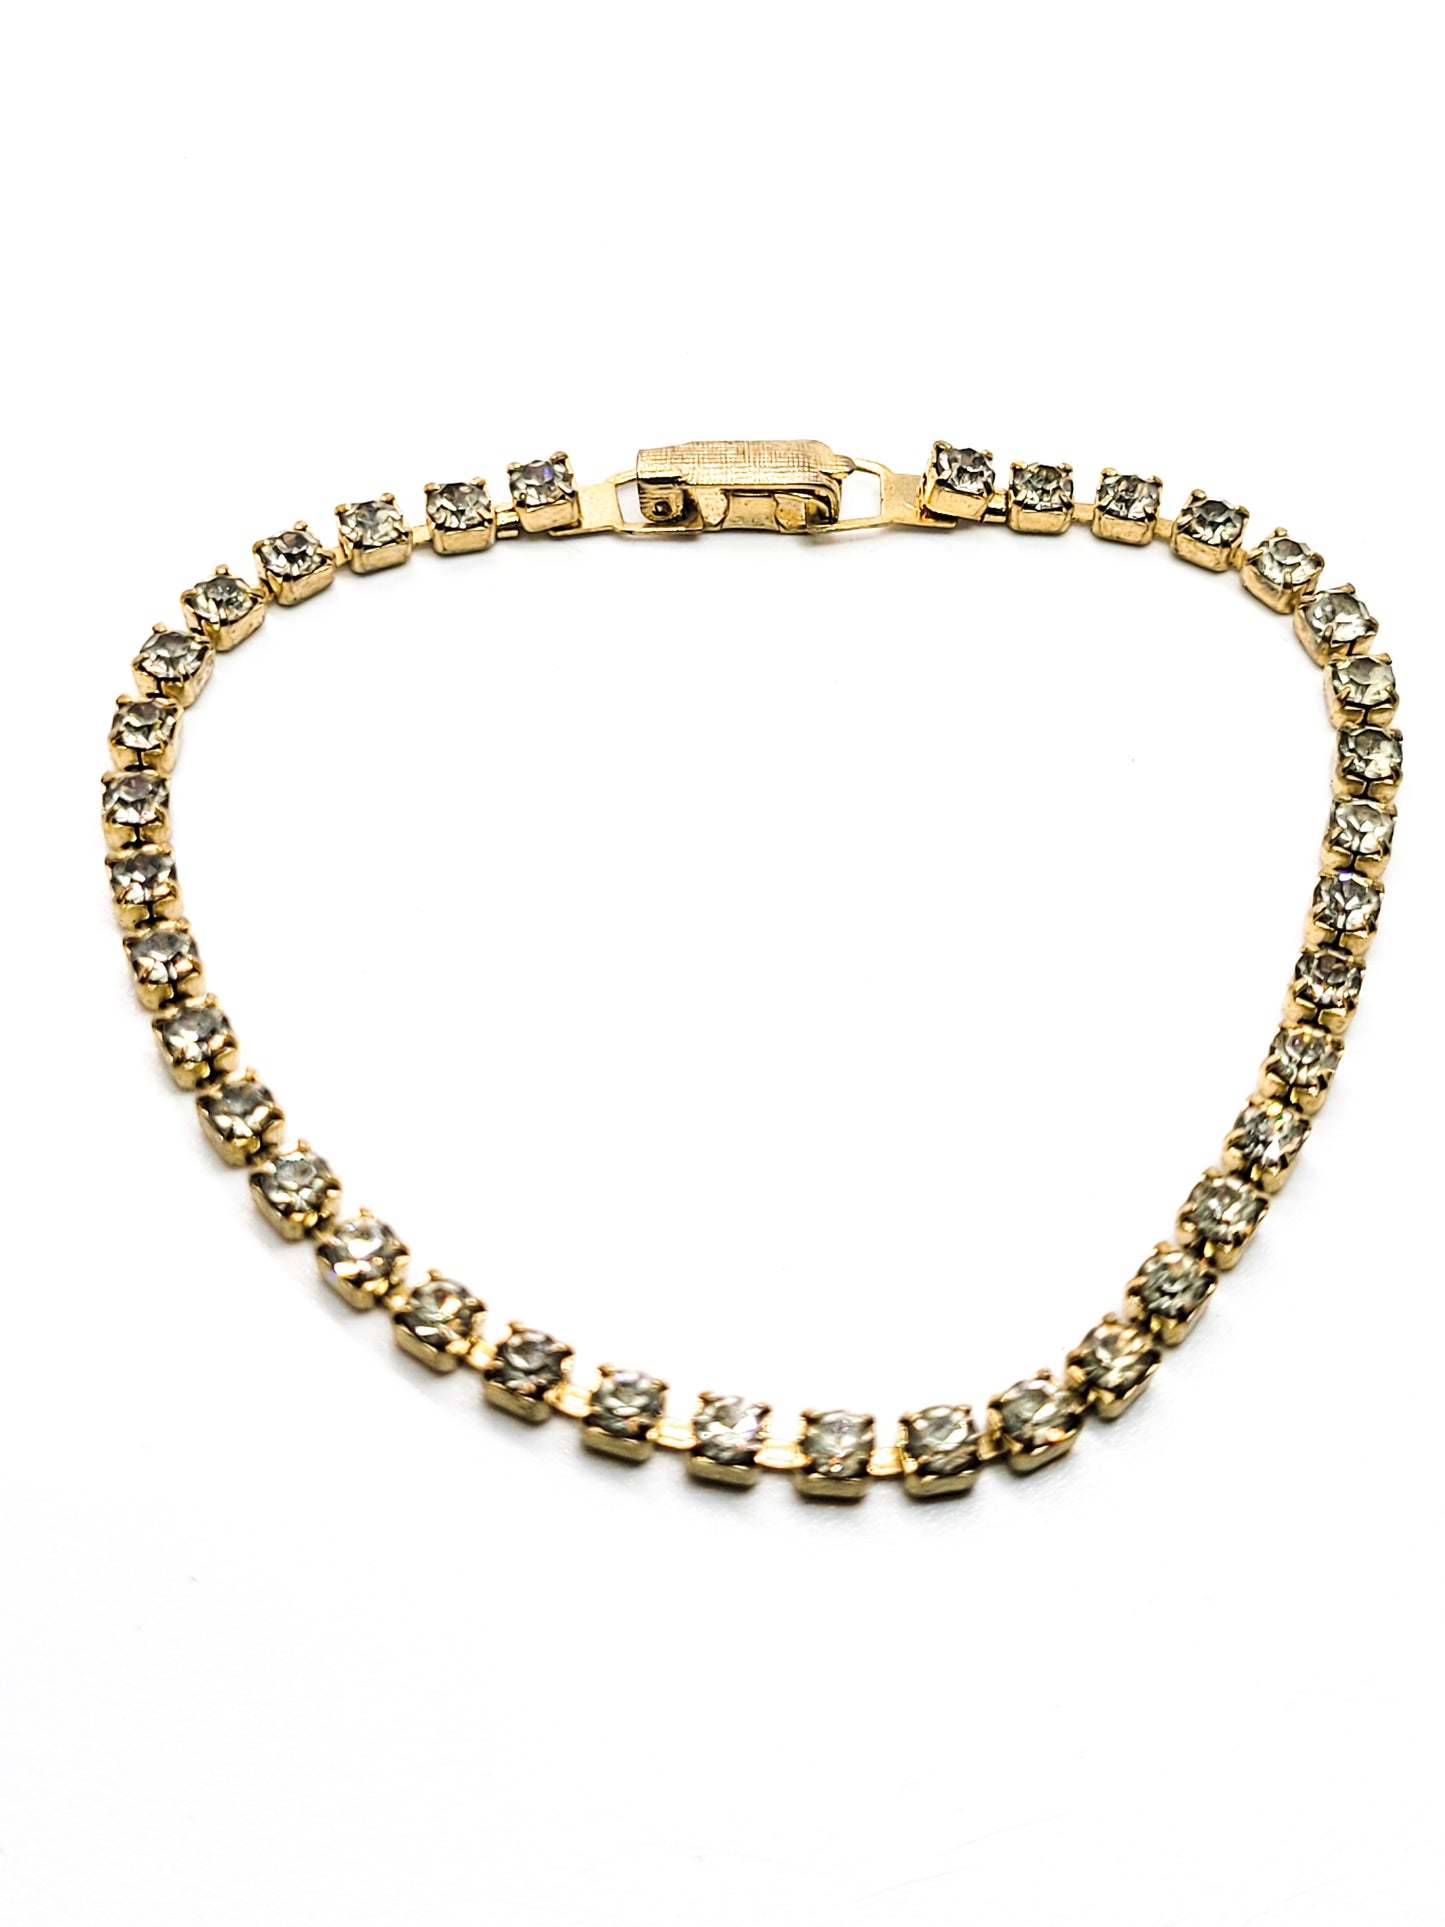 Single row simple clear gold toned vintage rhinestone tennis bracelet